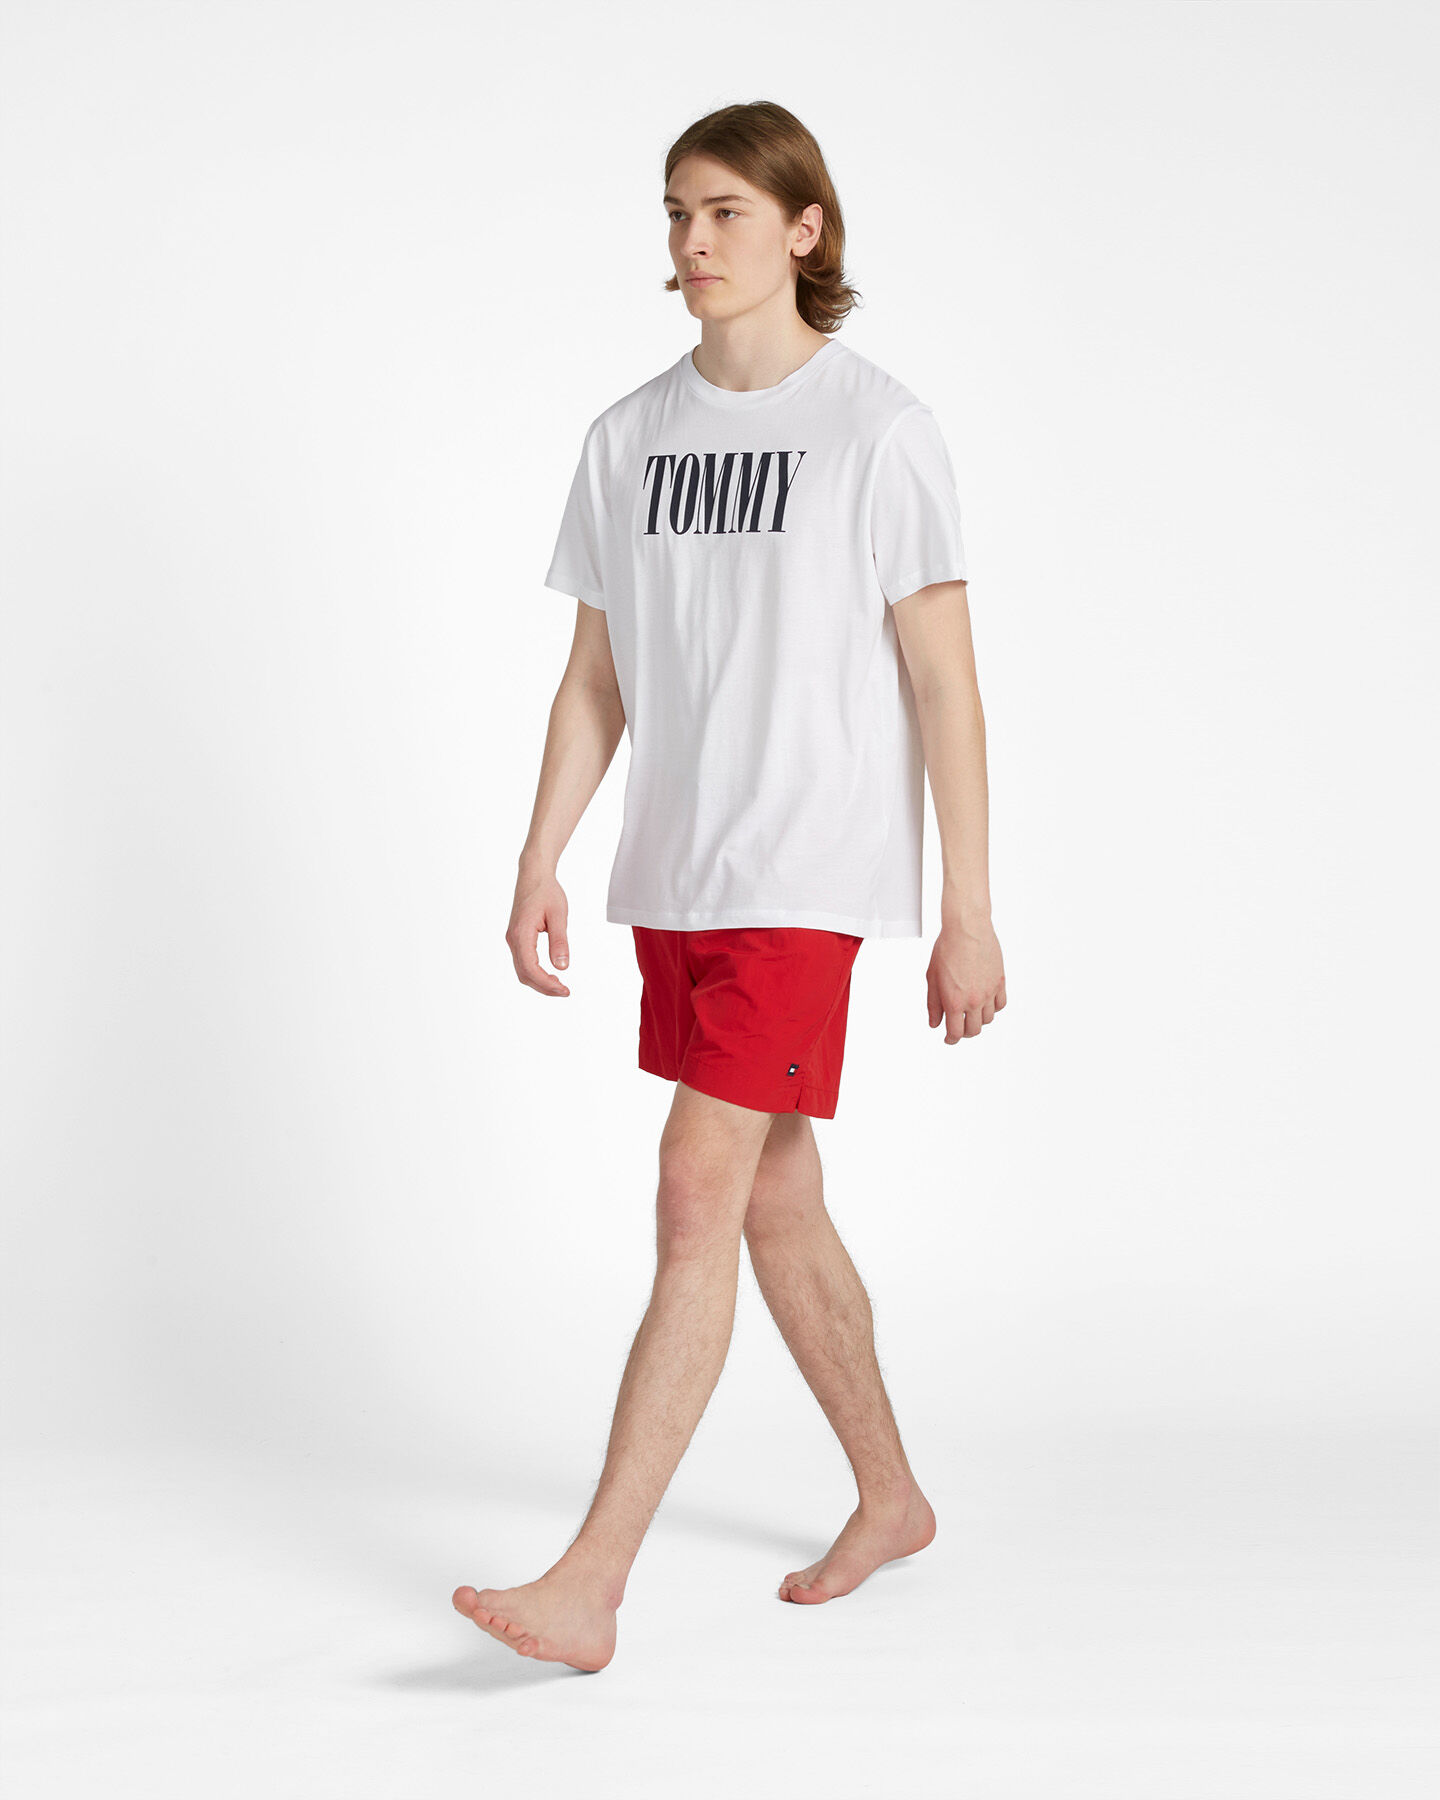  T-Shirt TOMMY HILFIGER LOGO M S4105805|YBR|L scatto 3